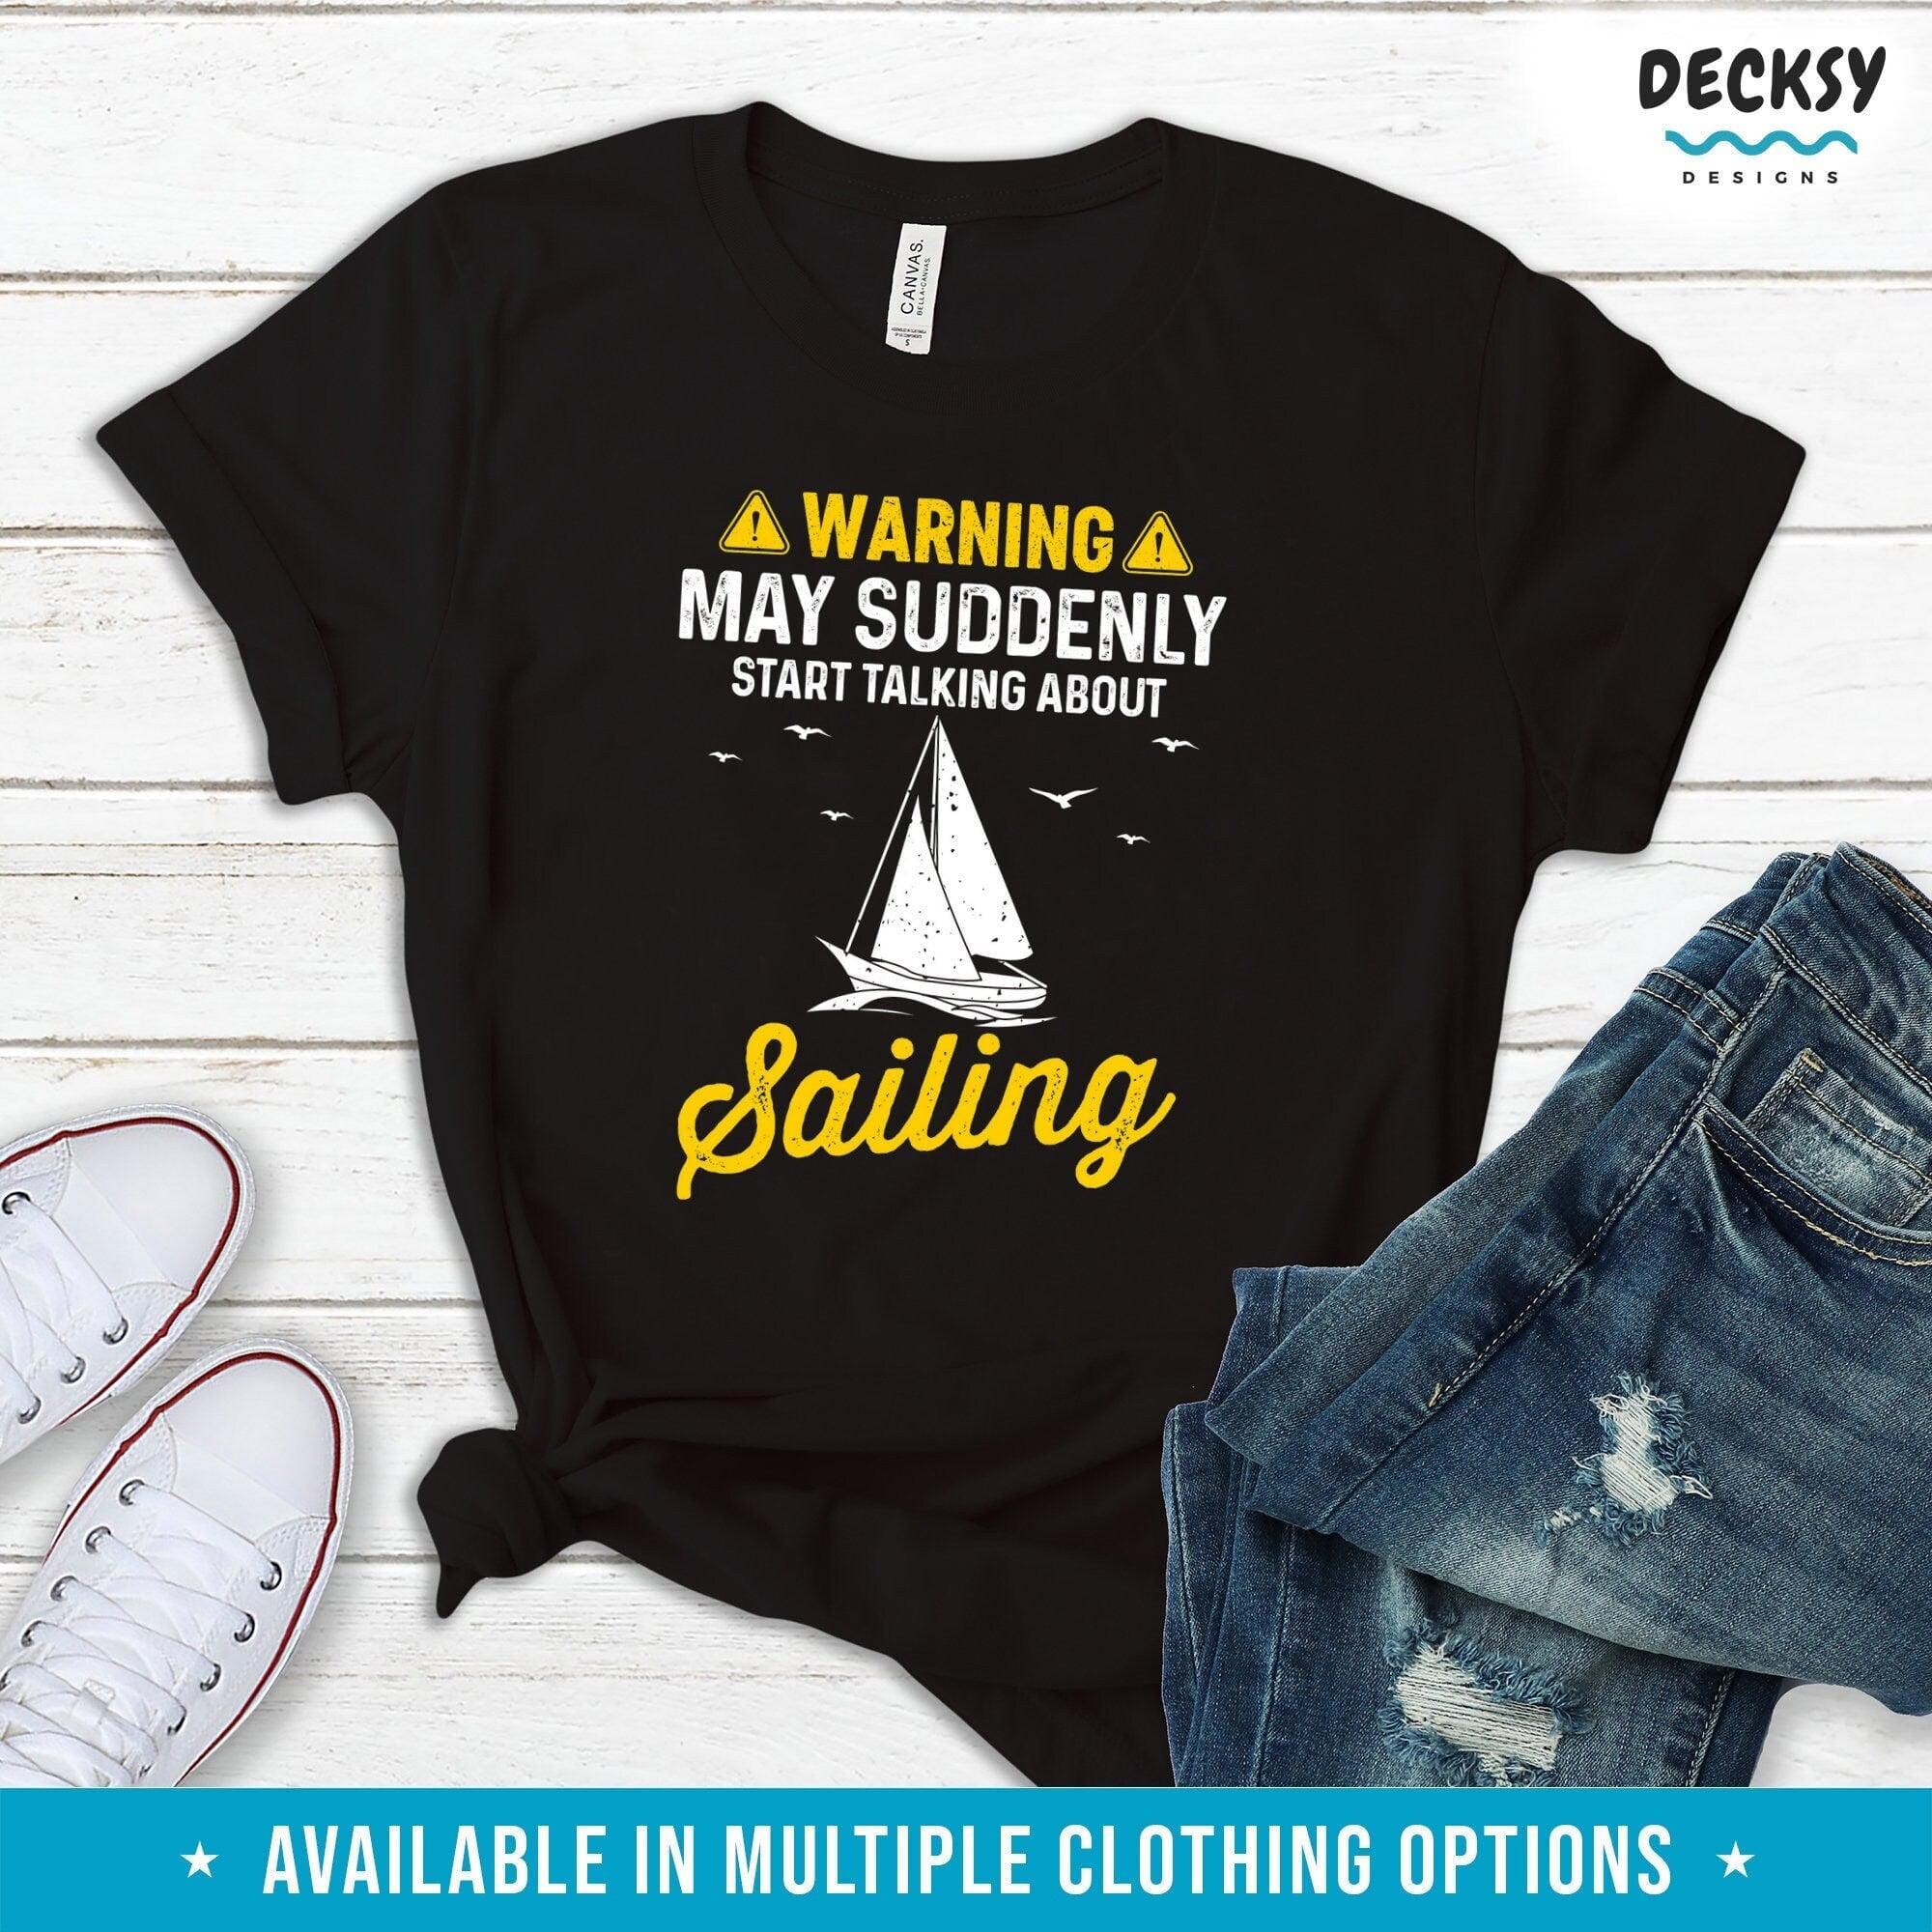 Sailing Shirt, Sailor Gift-Clothing:Gender-Neutral Adult Clothing:Tops & Tees:T-shirts:Graphic Tees-DecksyDesigns